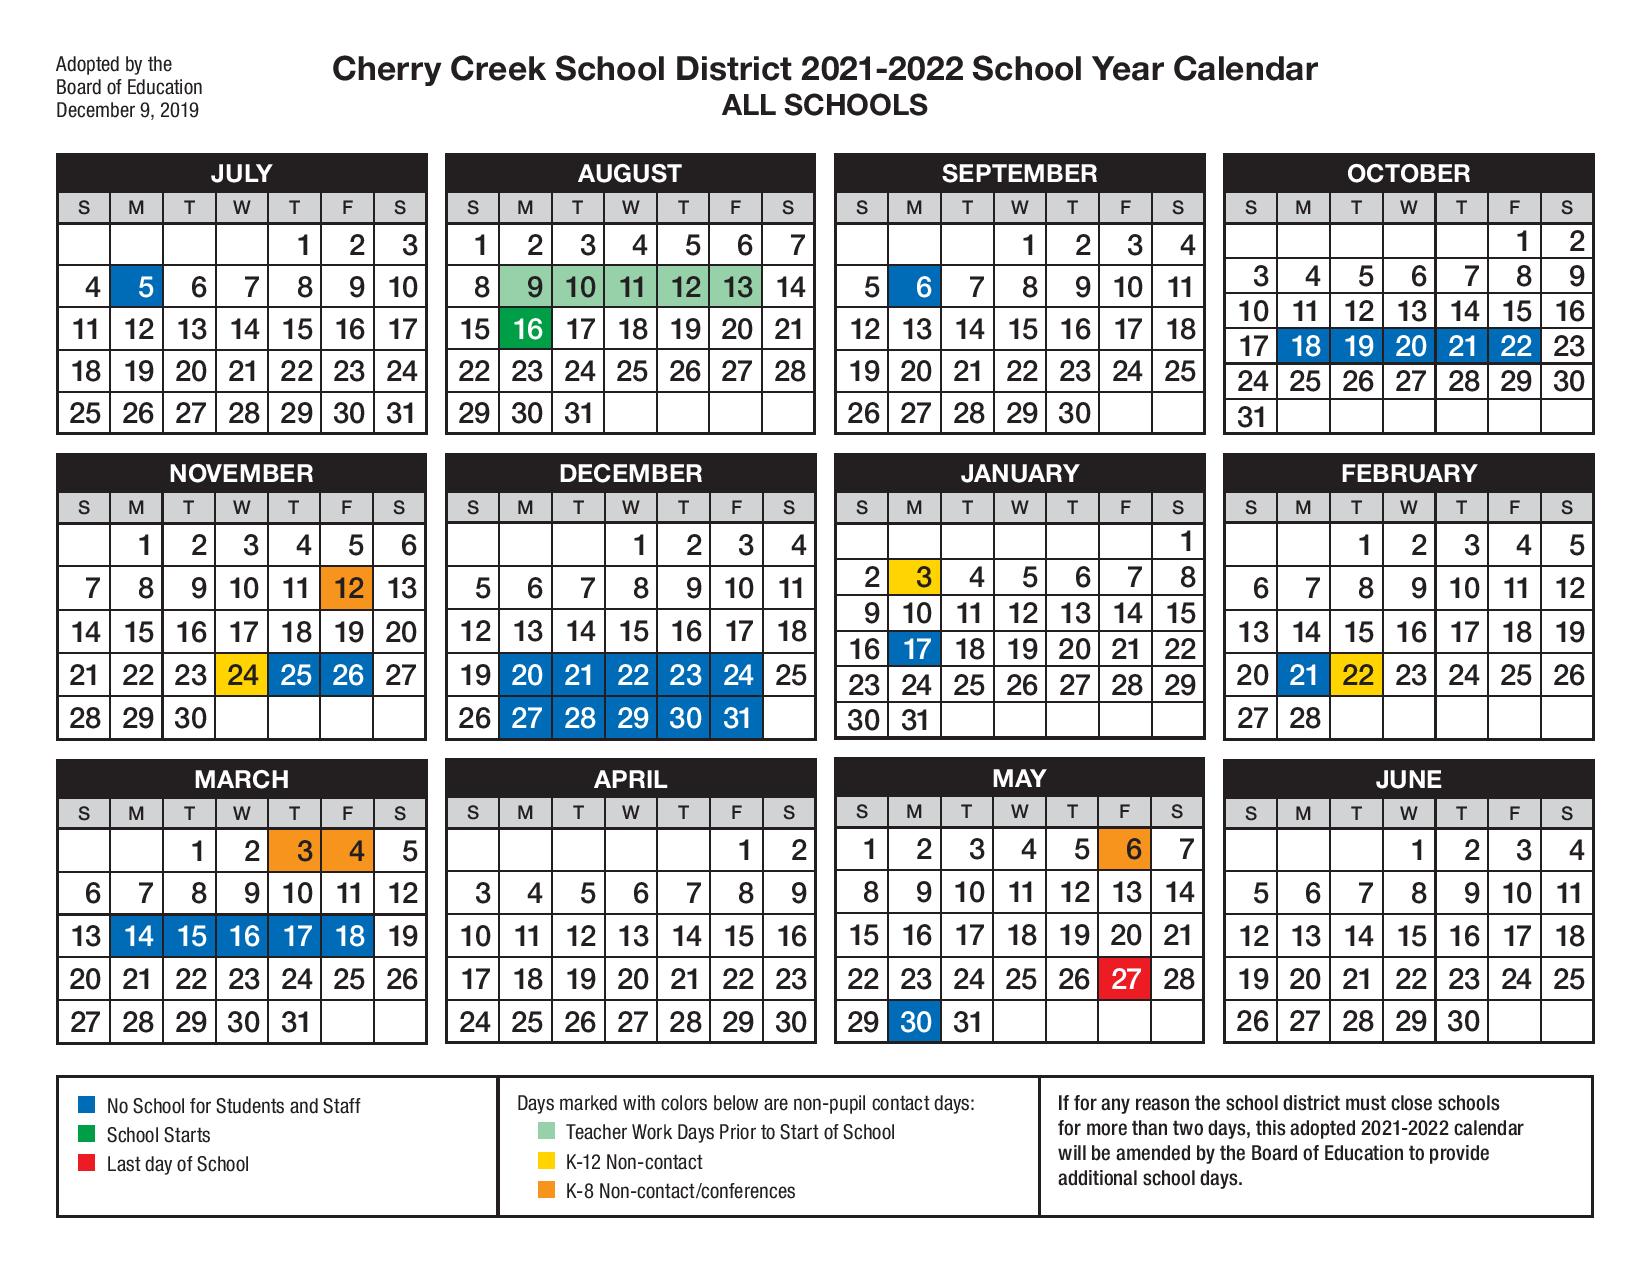 Cherry Creek School District Calendar Holidays 2021 2022